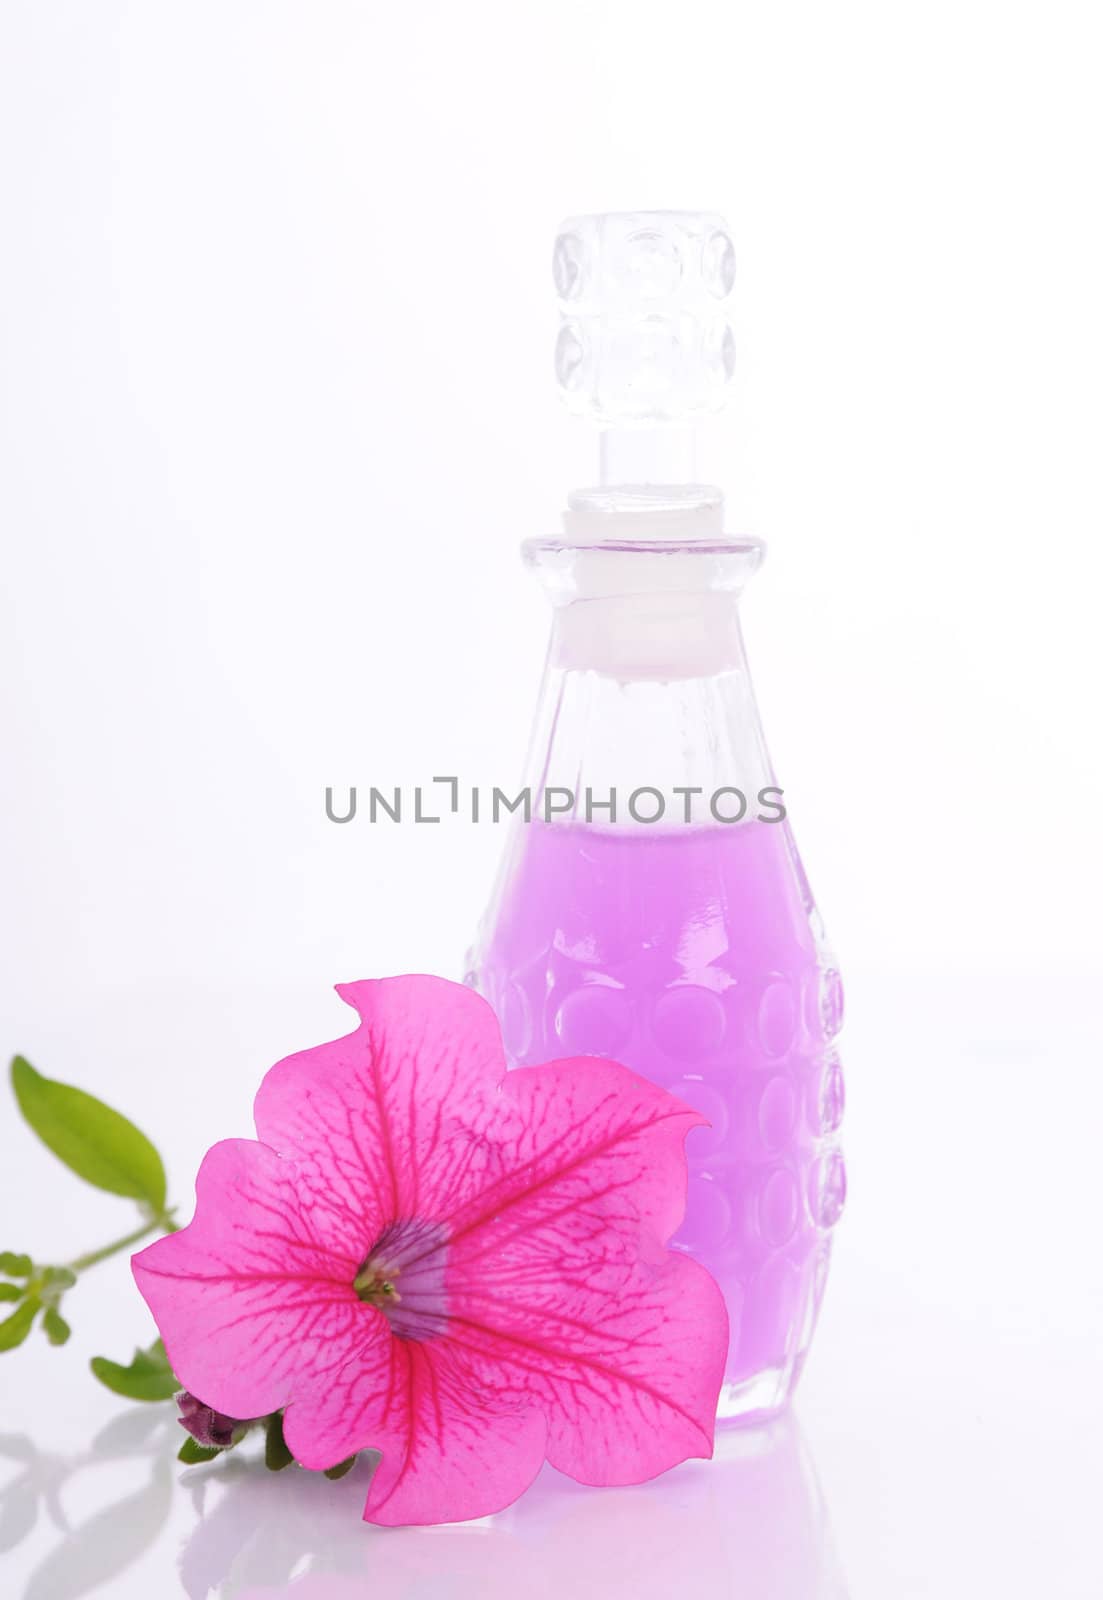 women's perfume in beautiful bottle and flower